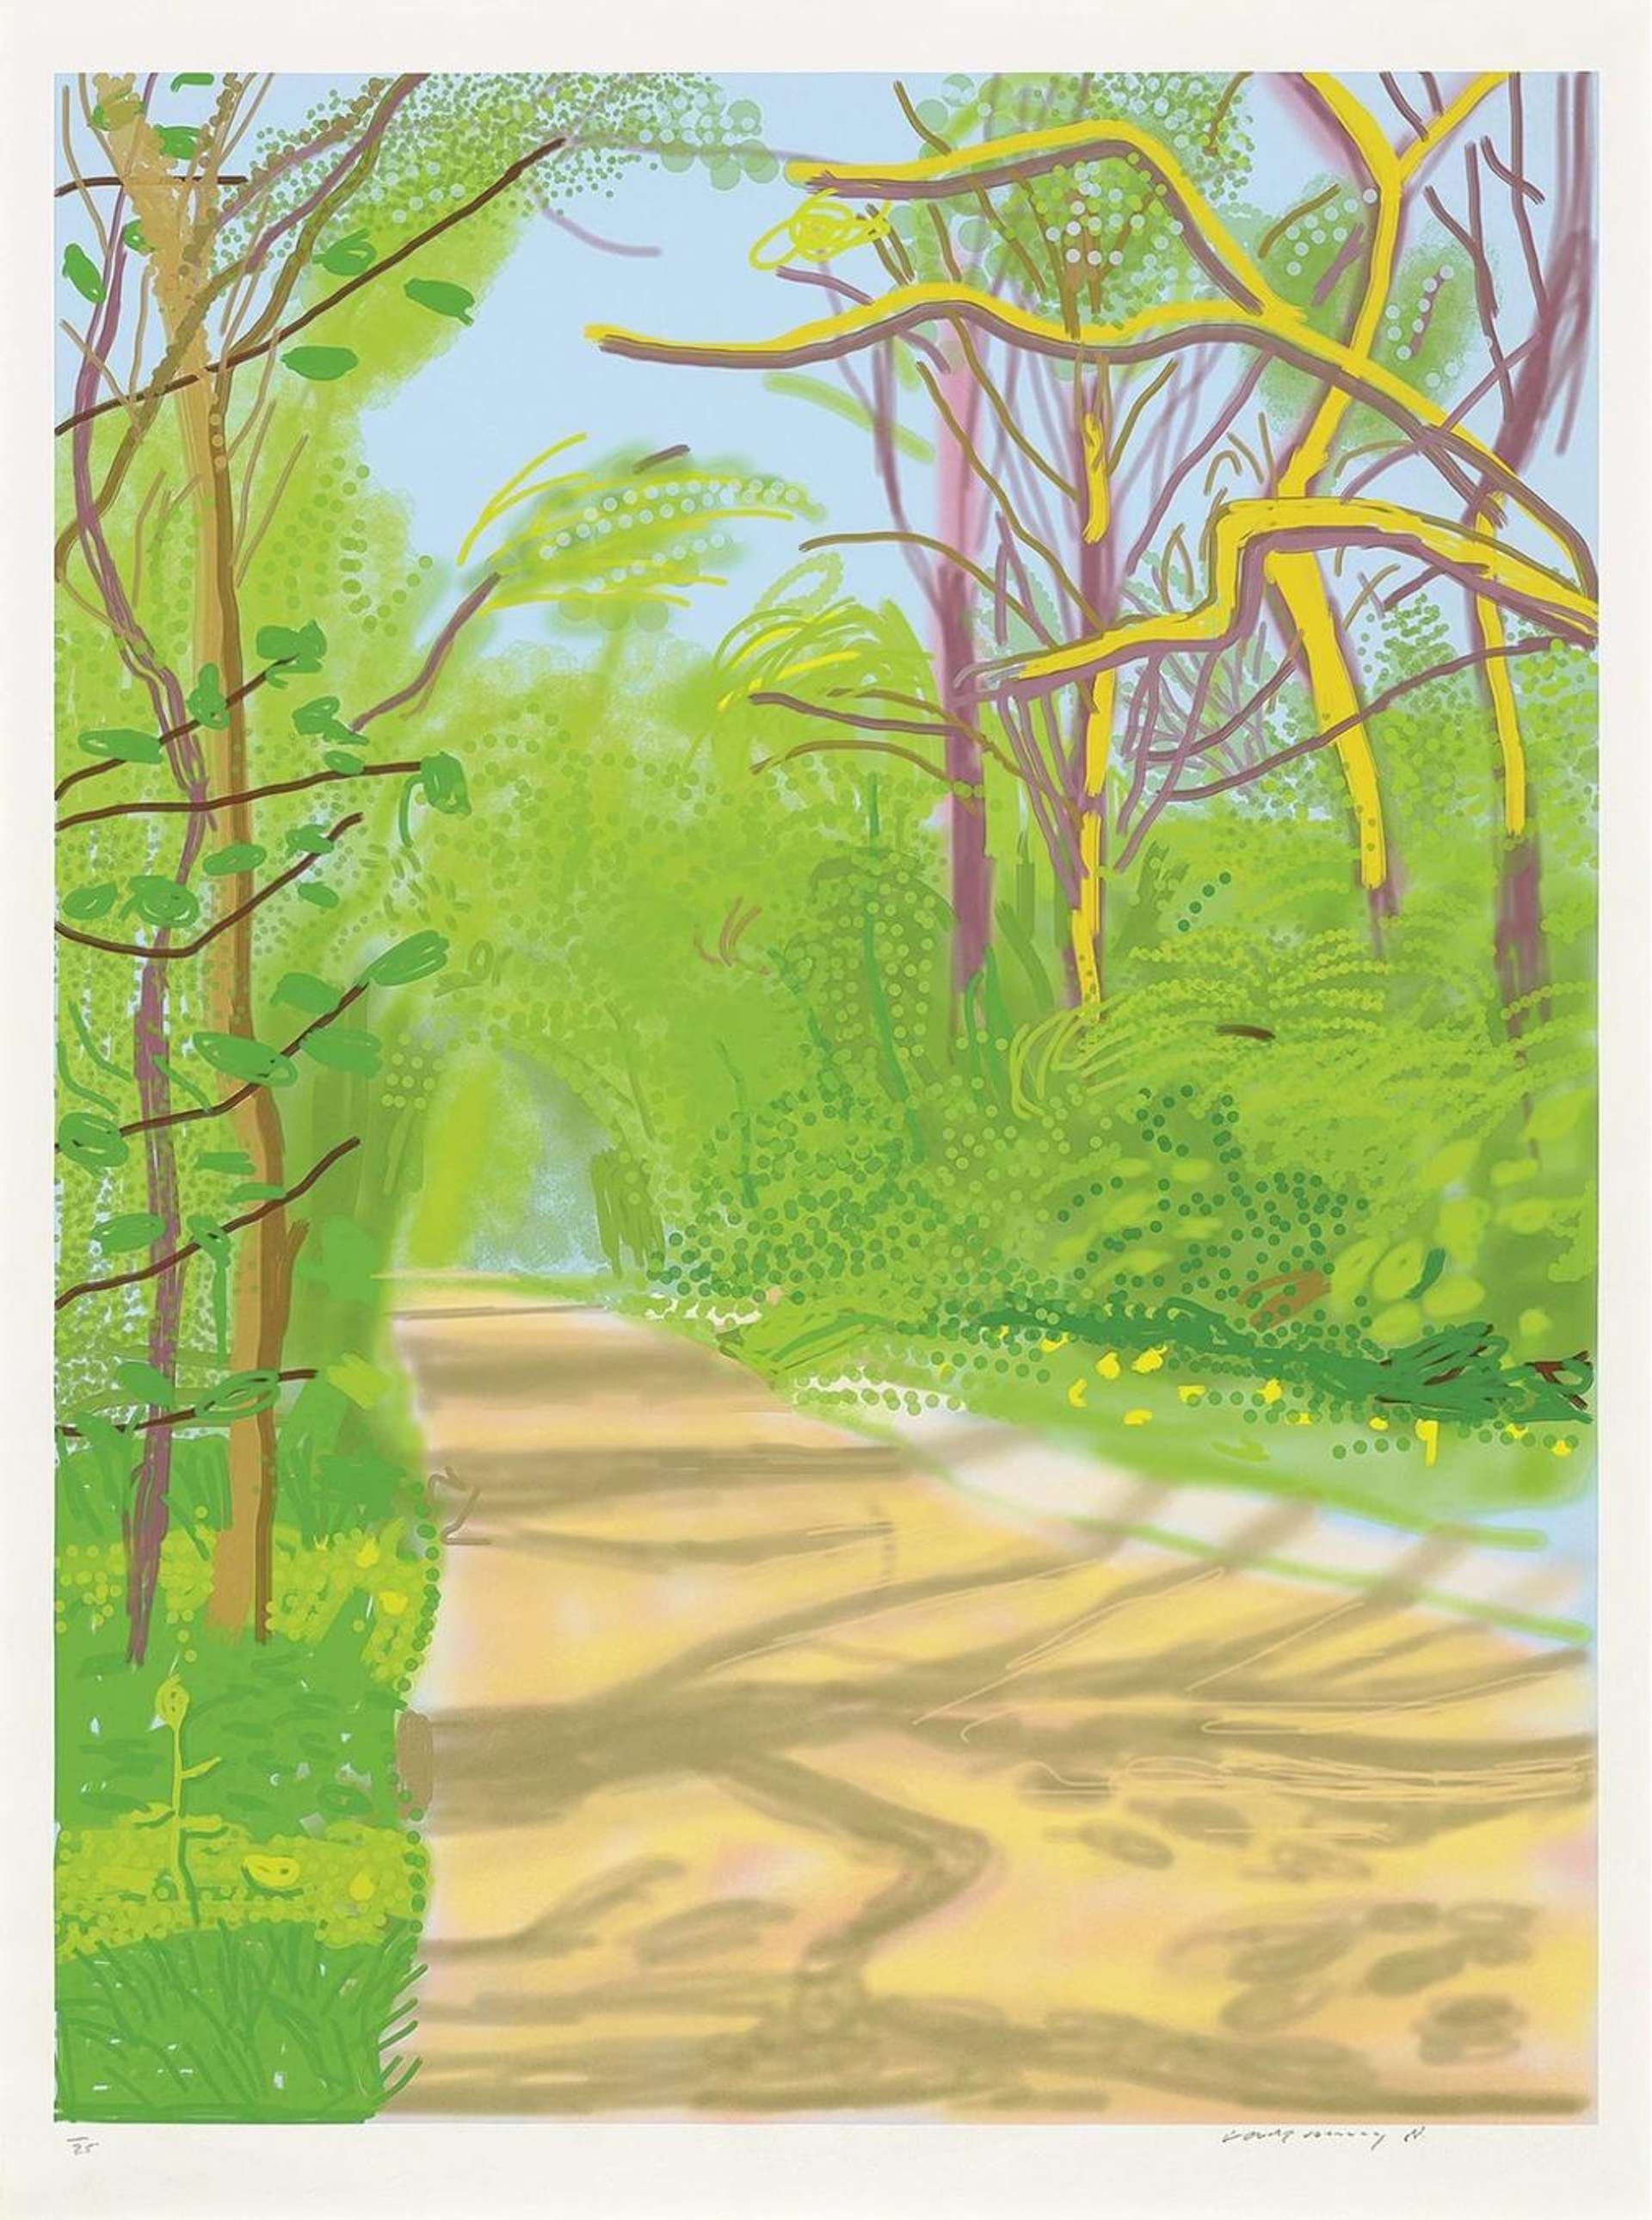 The Arrival Of Spring In Woldgate East Yorkshire 25th April 2011 - Signed Print by David Hockney 2011 - MyArtBroker